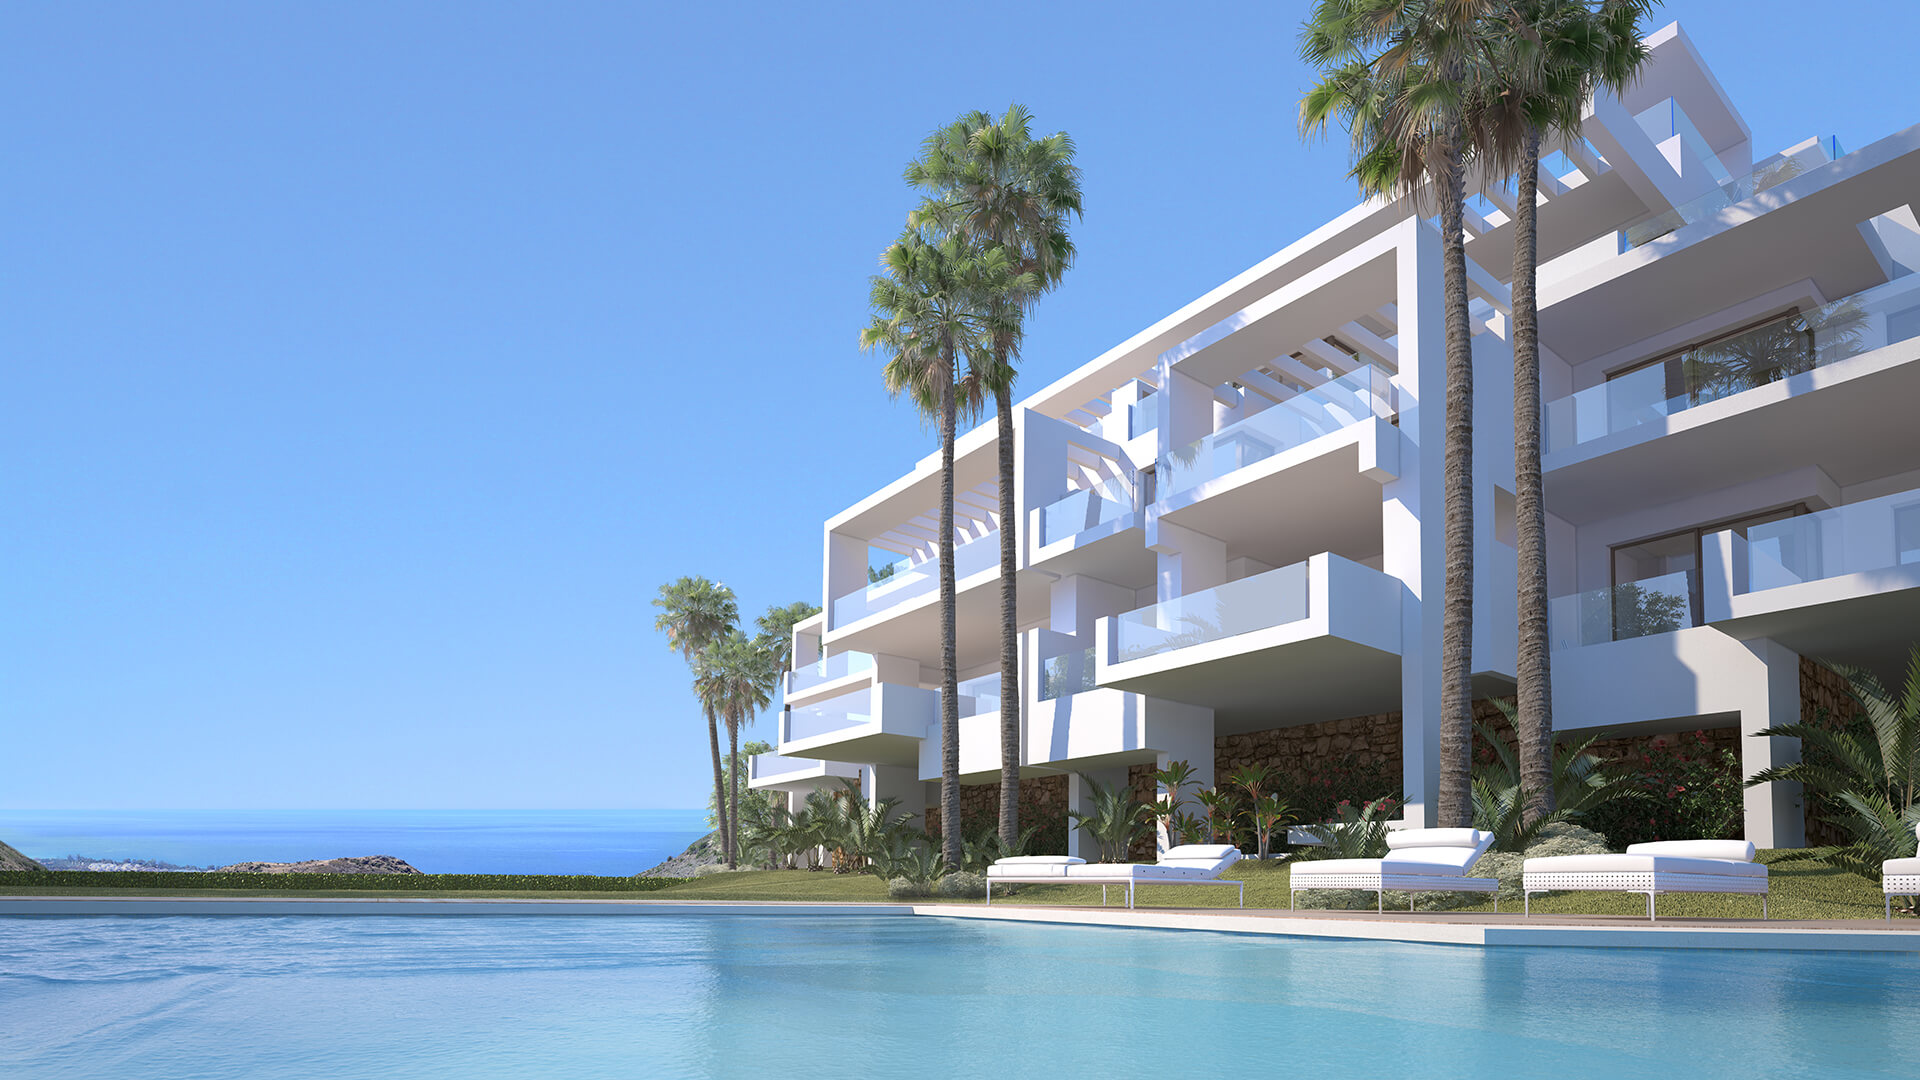 Marbella Apartments - New Property For Sale in Ojén, Costa del Sol